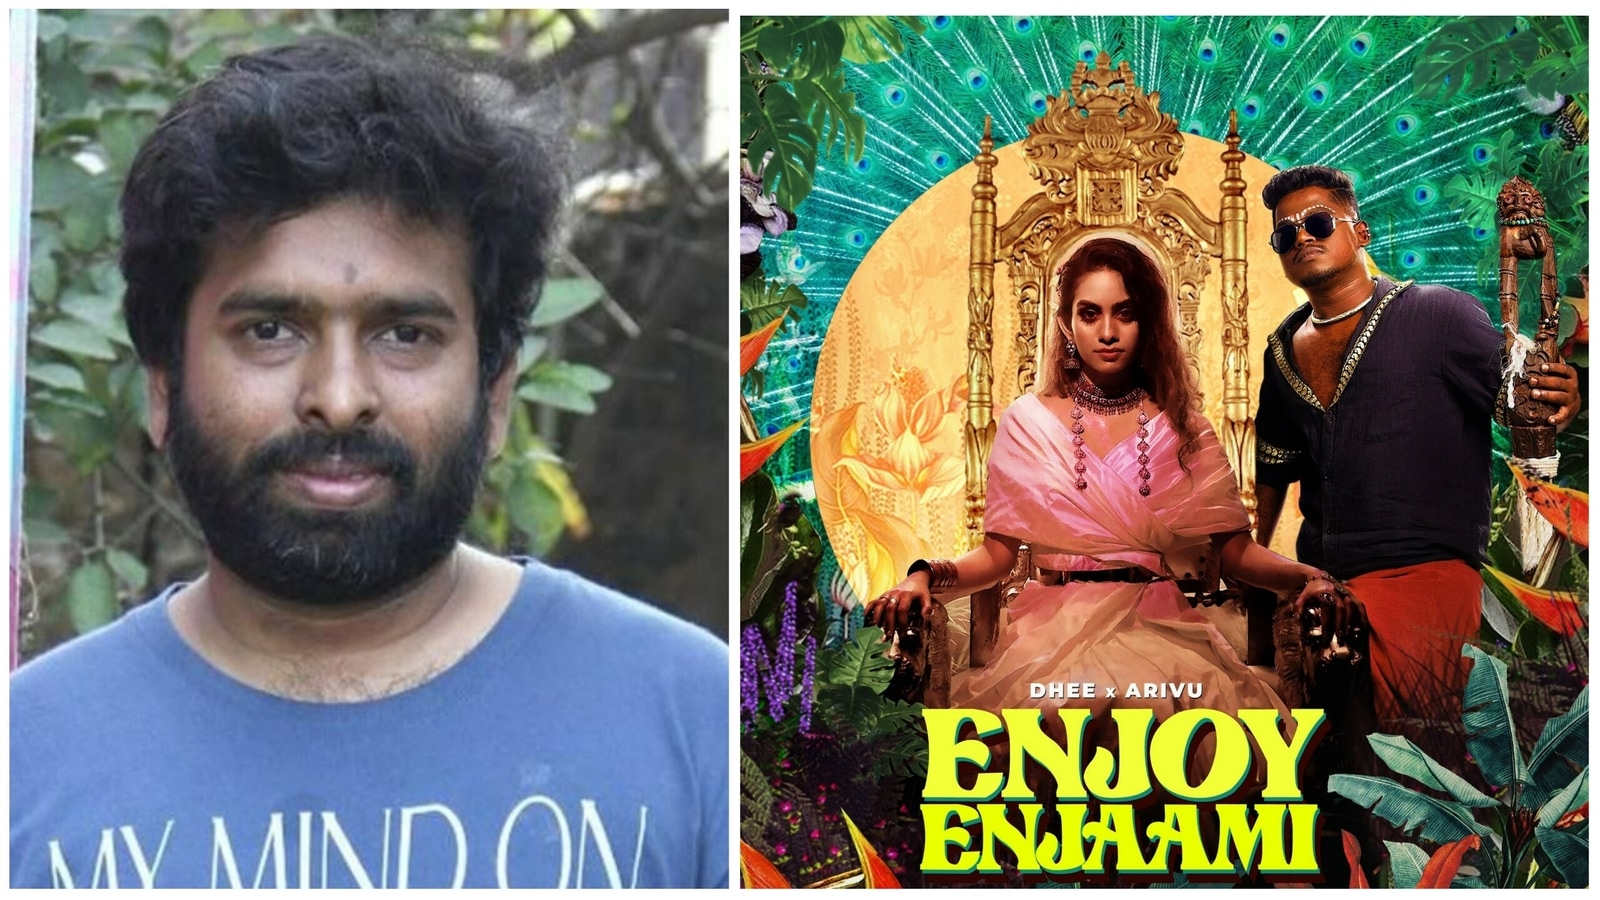 Amid Aviru’s claims, Santosh Narayanan calls Enjoy Enjaami ‘a team effort’, says he composed it